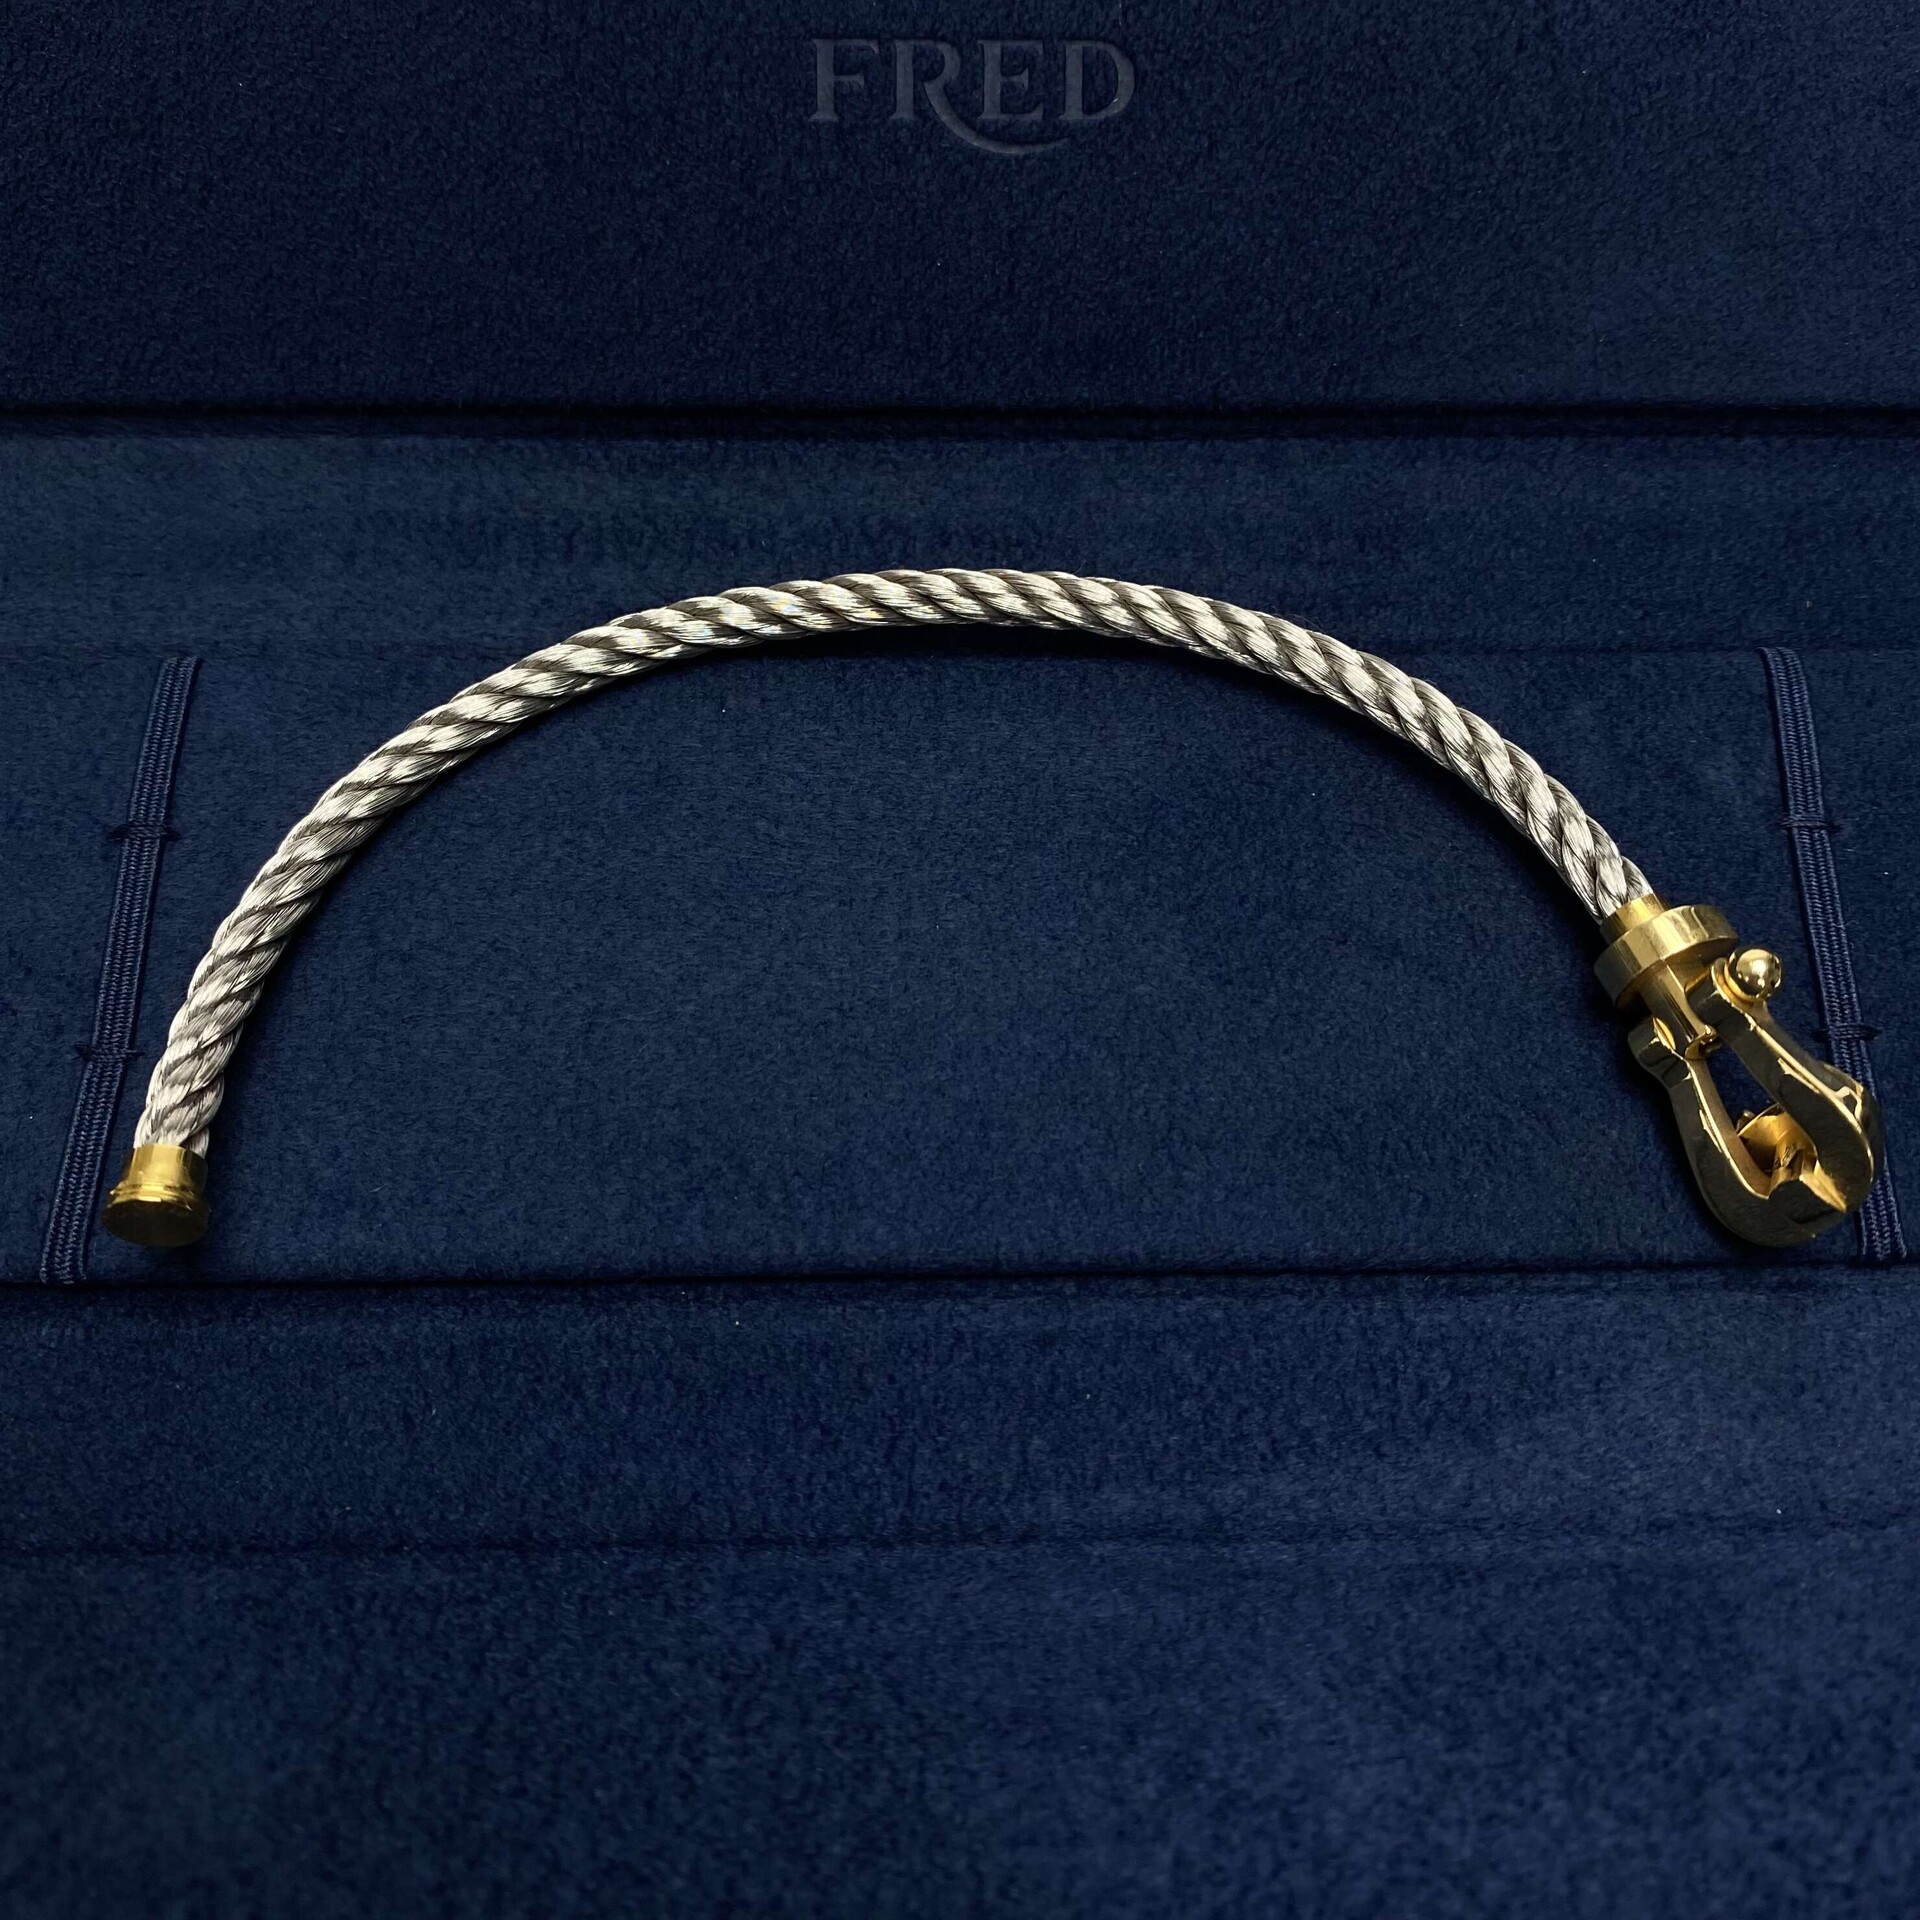 Bracelete Fred Force 10 - Modelo Largo